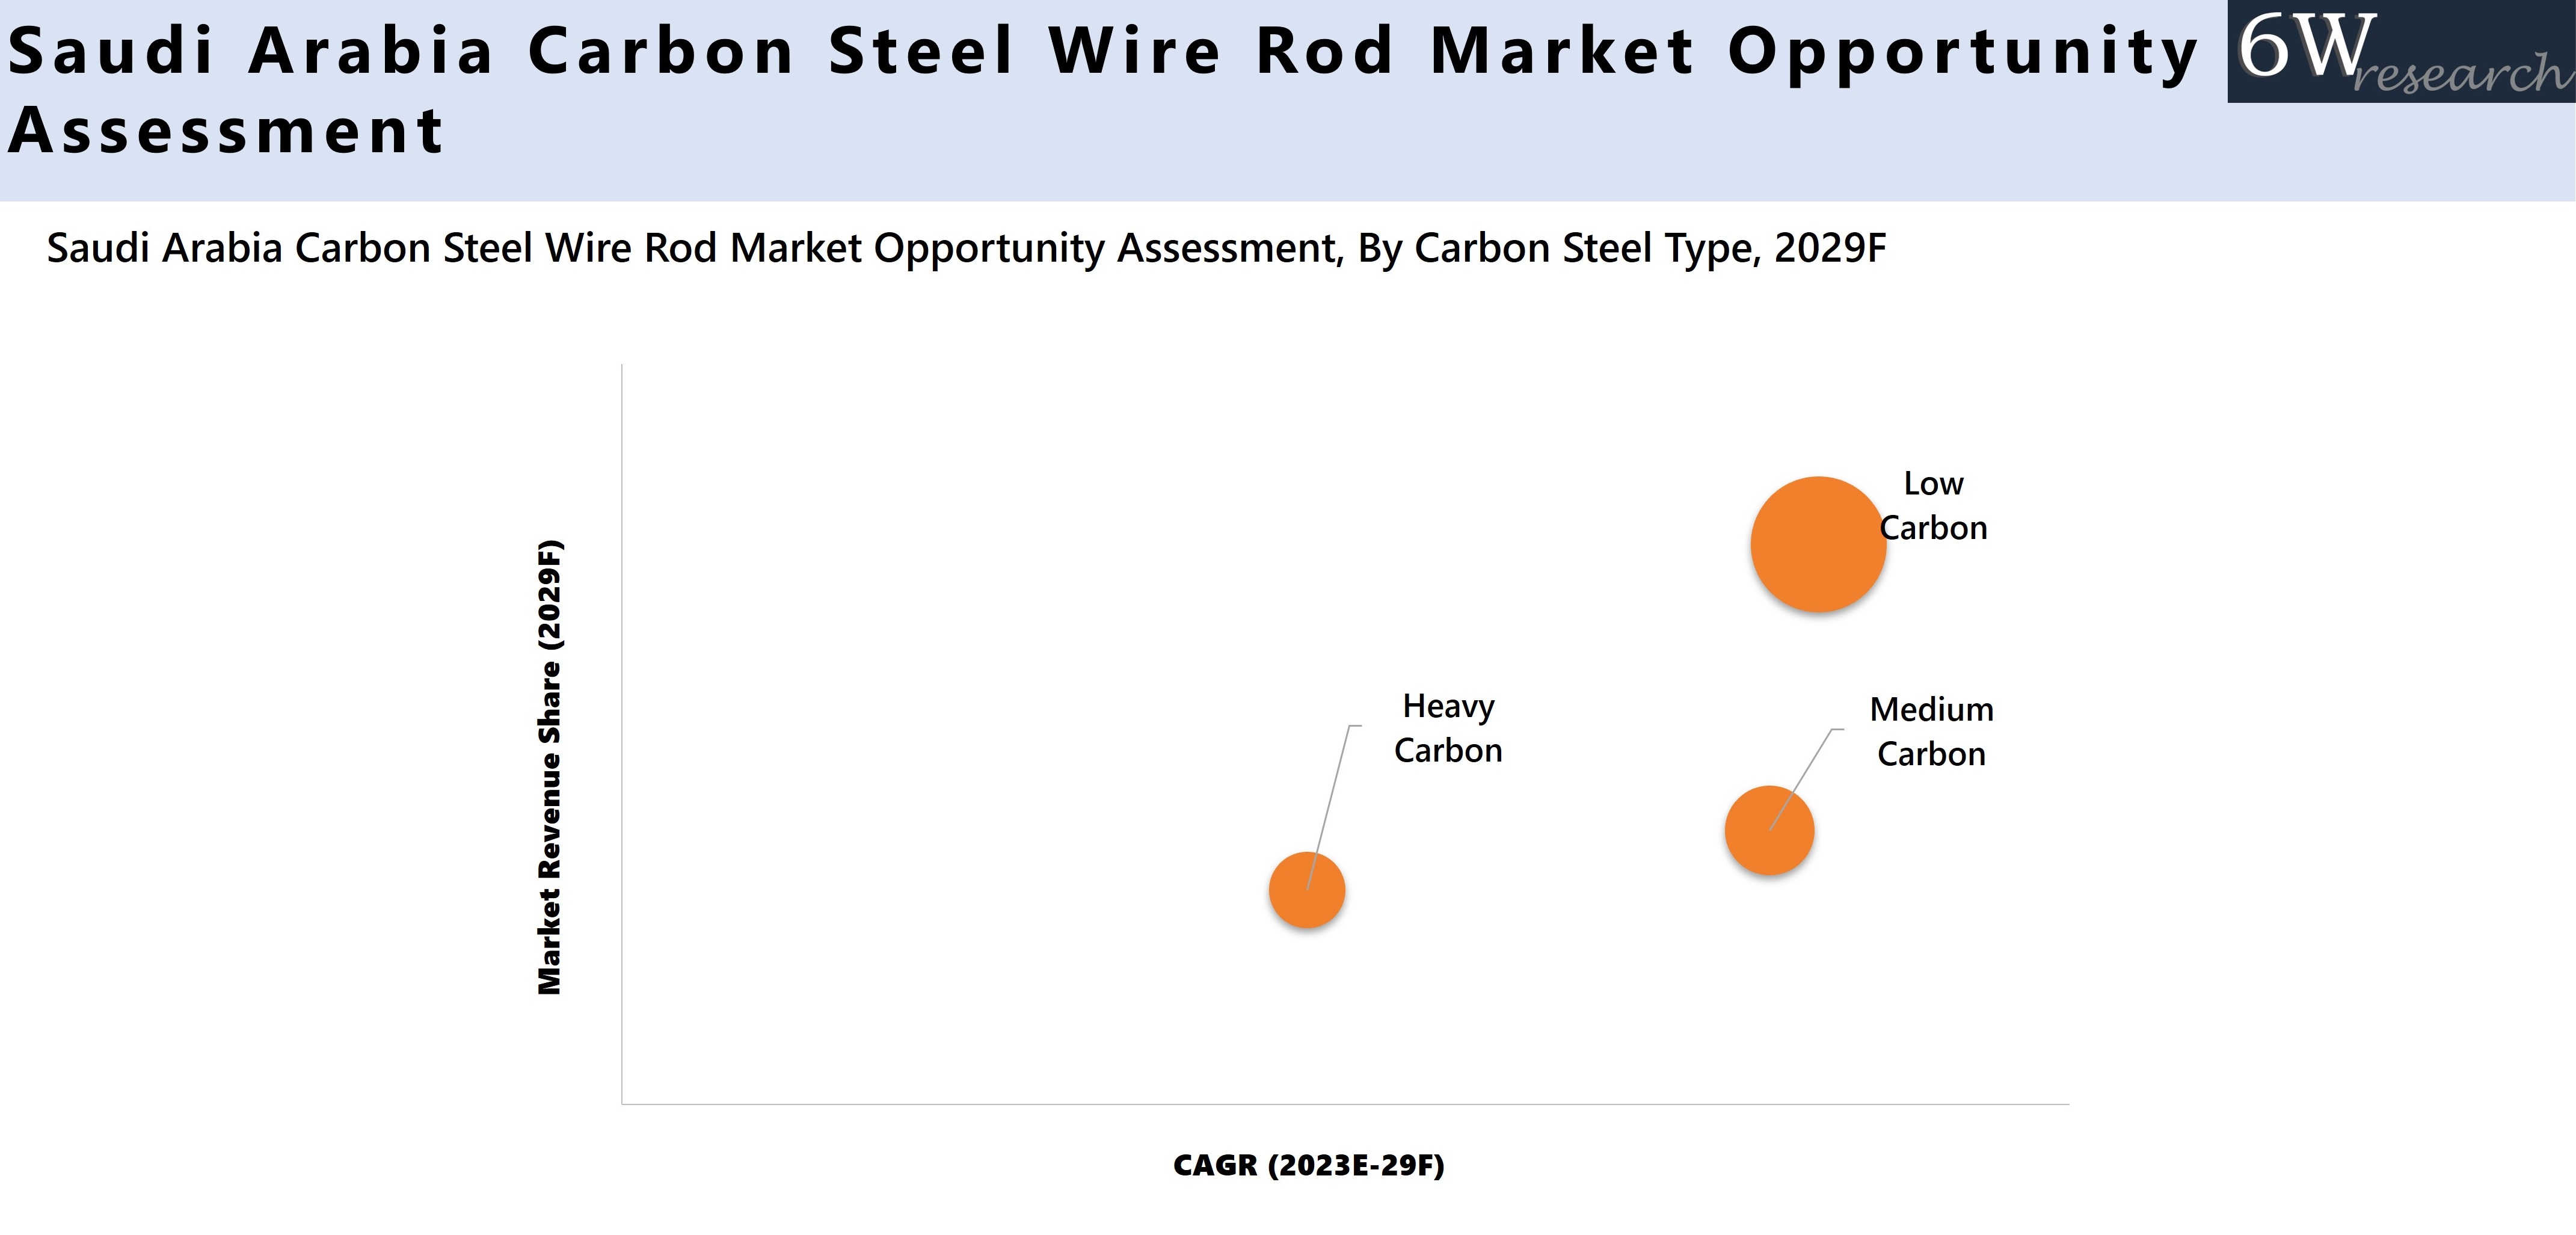 Saudi Arabia Carbon Steel Wire Rod Market Opportunity Assessment